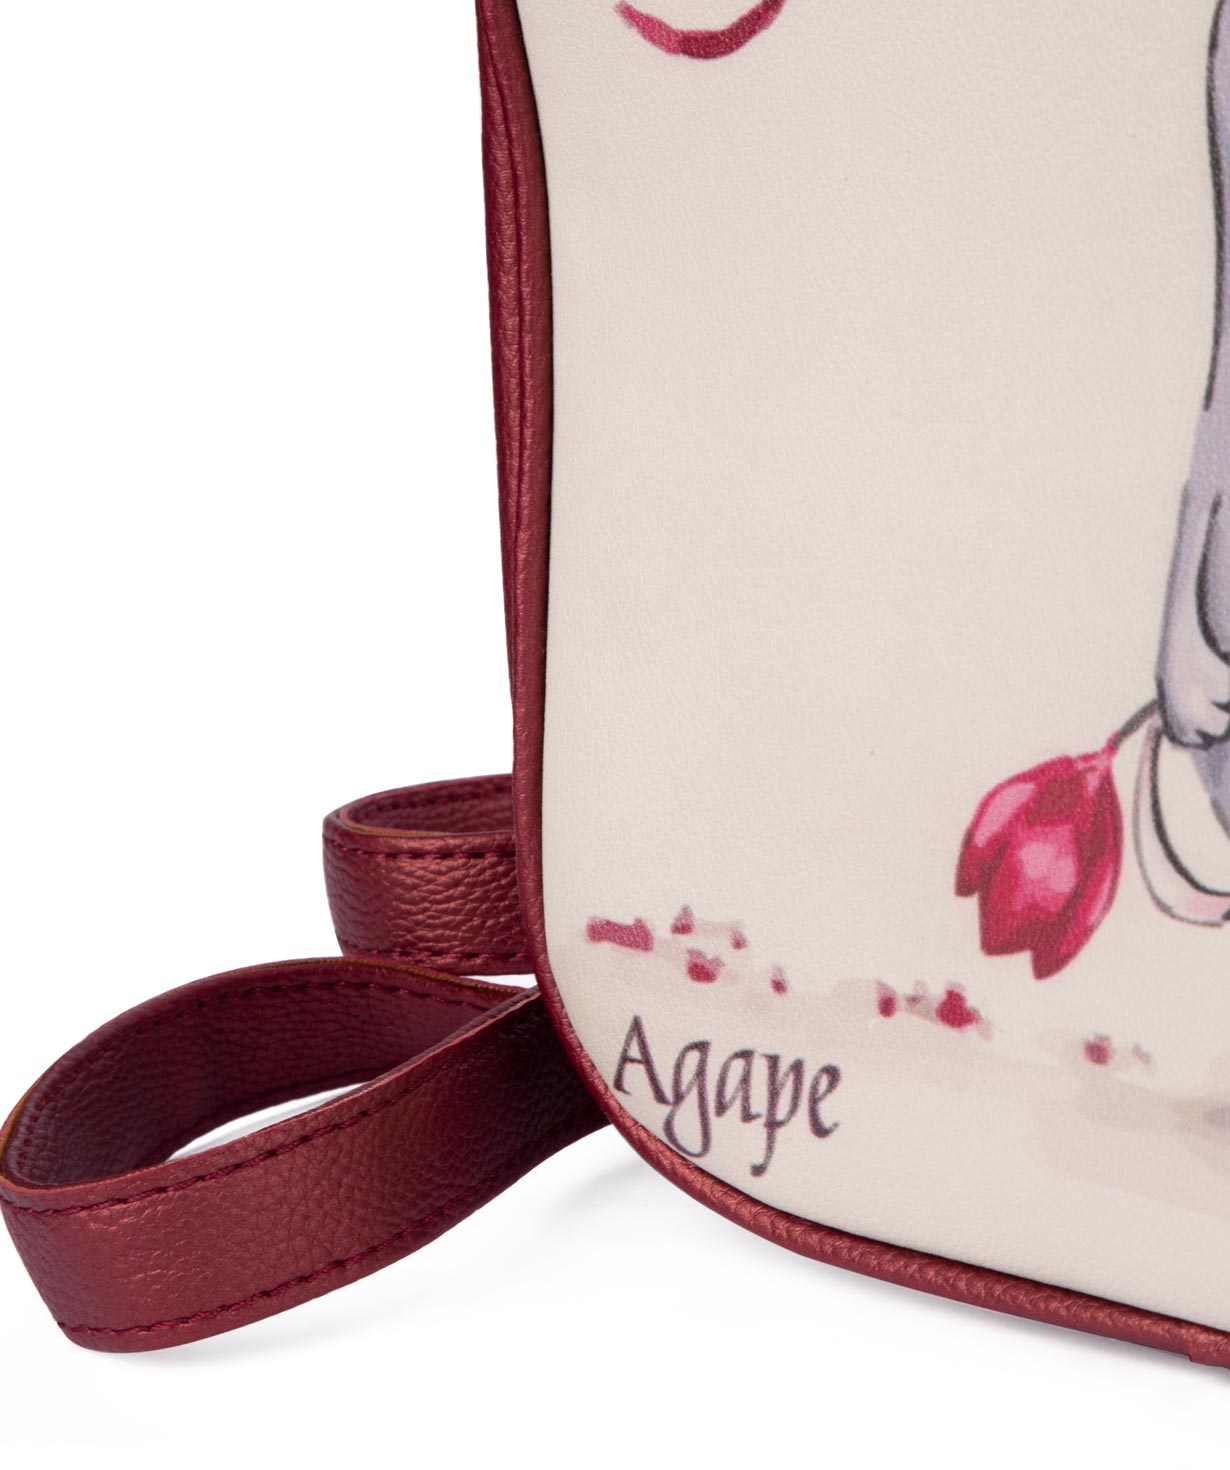 Bag `Agape bags` sorry